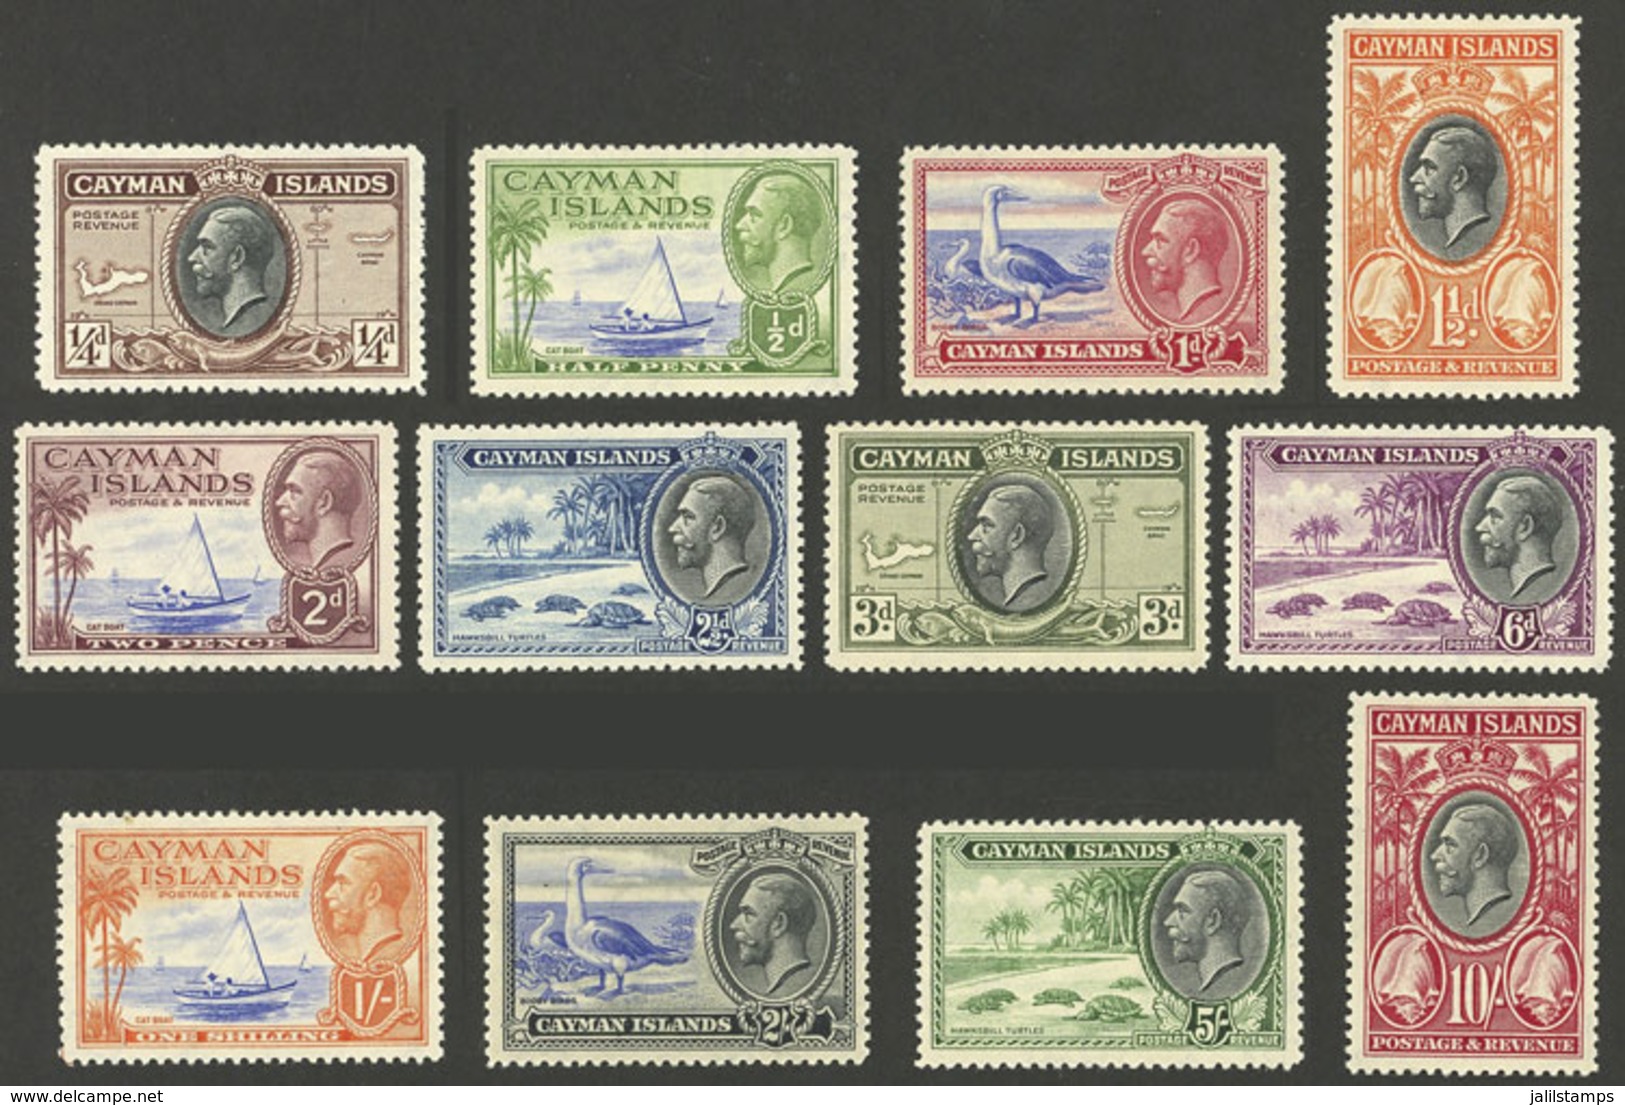 CAYMAN ISLANDS: Sc.85/96, 1935/6 Fauna, Etc., Cmpl. Set Of 12 Values, Mint Very Lightly Hinged, Very Fine Quality! - Iles Caïmans